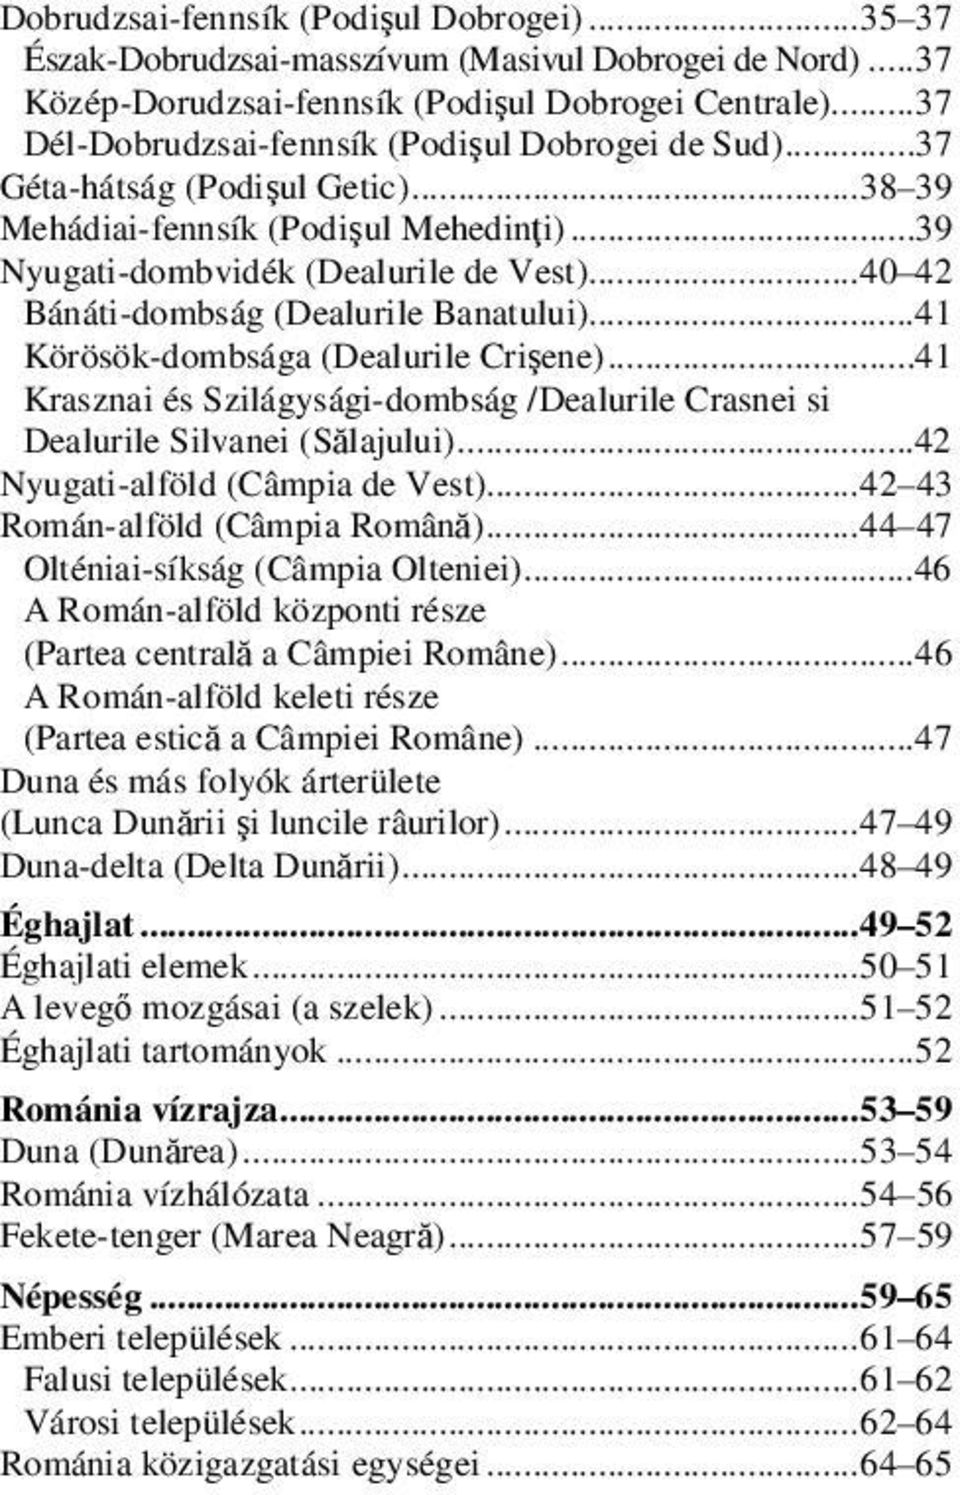 .. 40 42 Bánáti-dombság (Dealurile Banatului)...41 Körösök-dombsága (Dealurile Crişene)...41 Krasznai és Szilágysági-dombság /Dealurile Crasnei si Dealurile Silvanei (Sălajului).